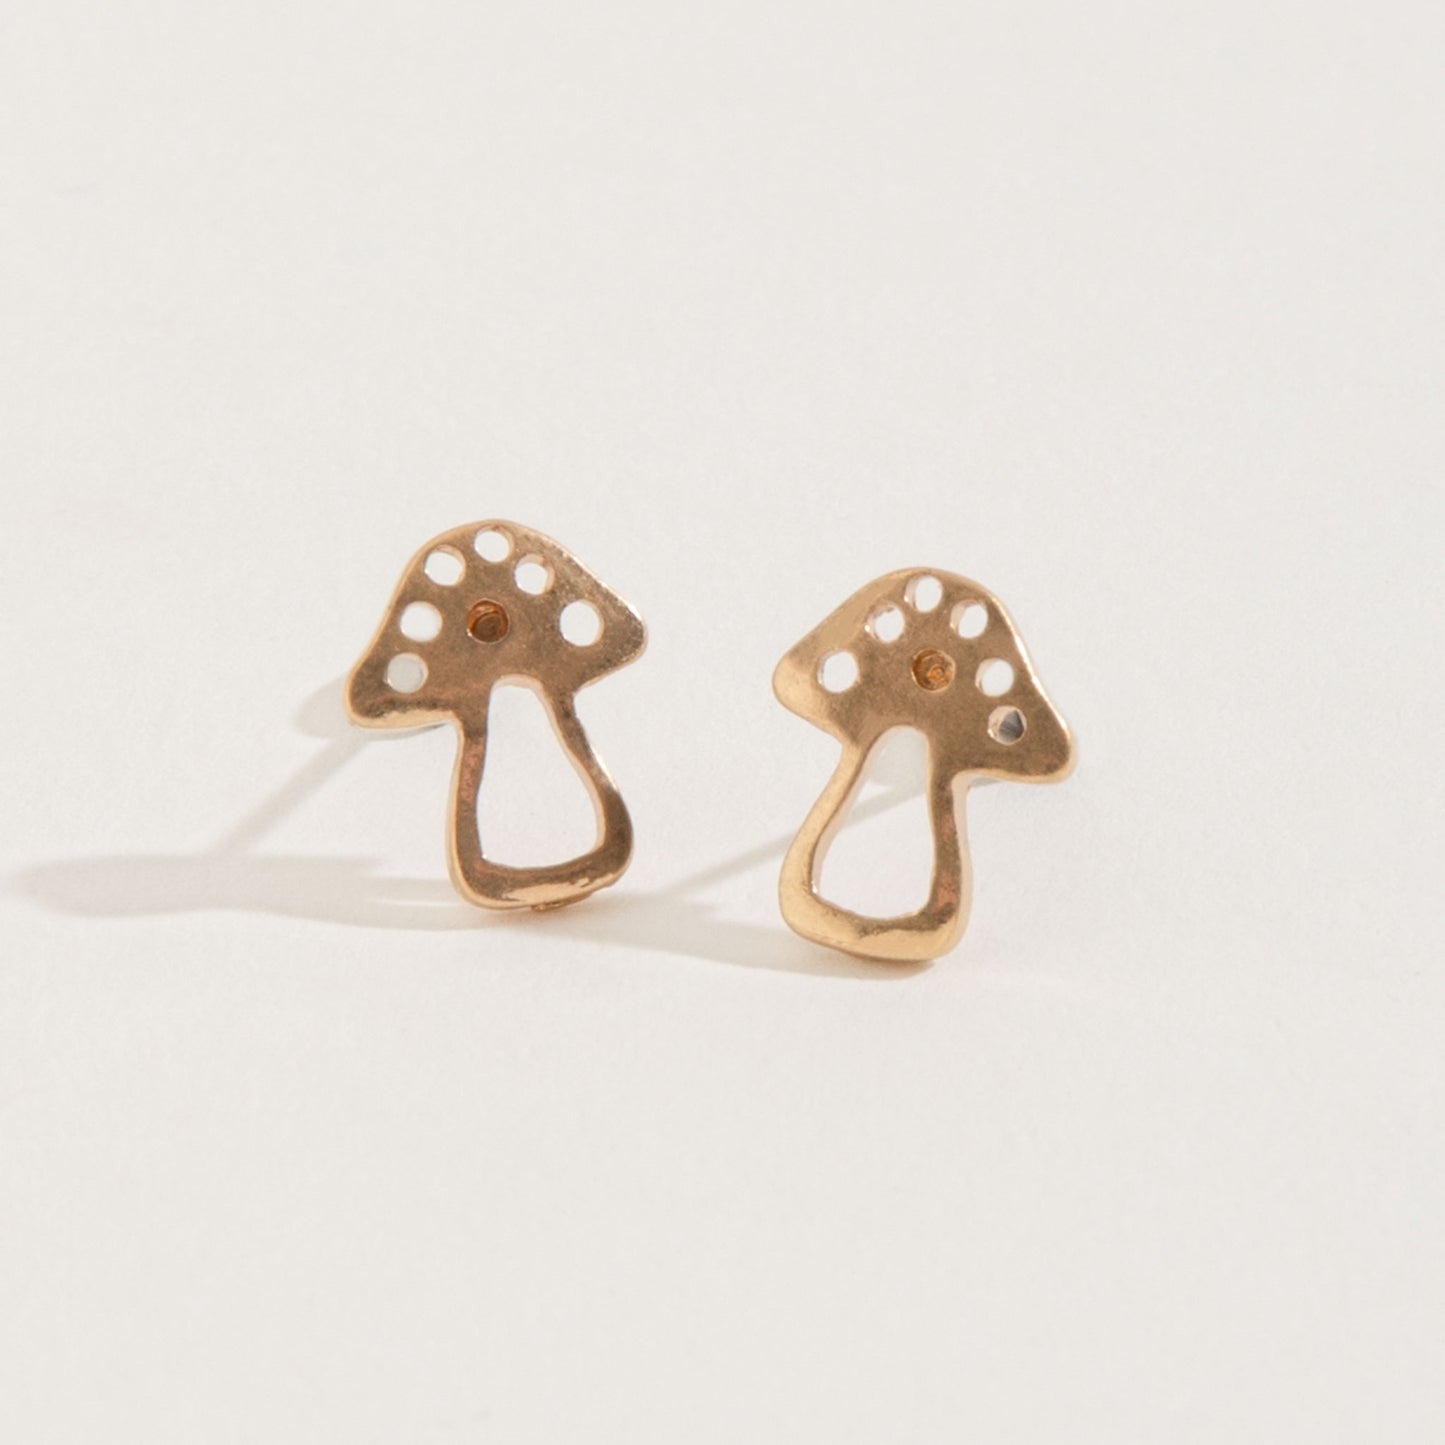 gold mushroom stud earrings on a white background